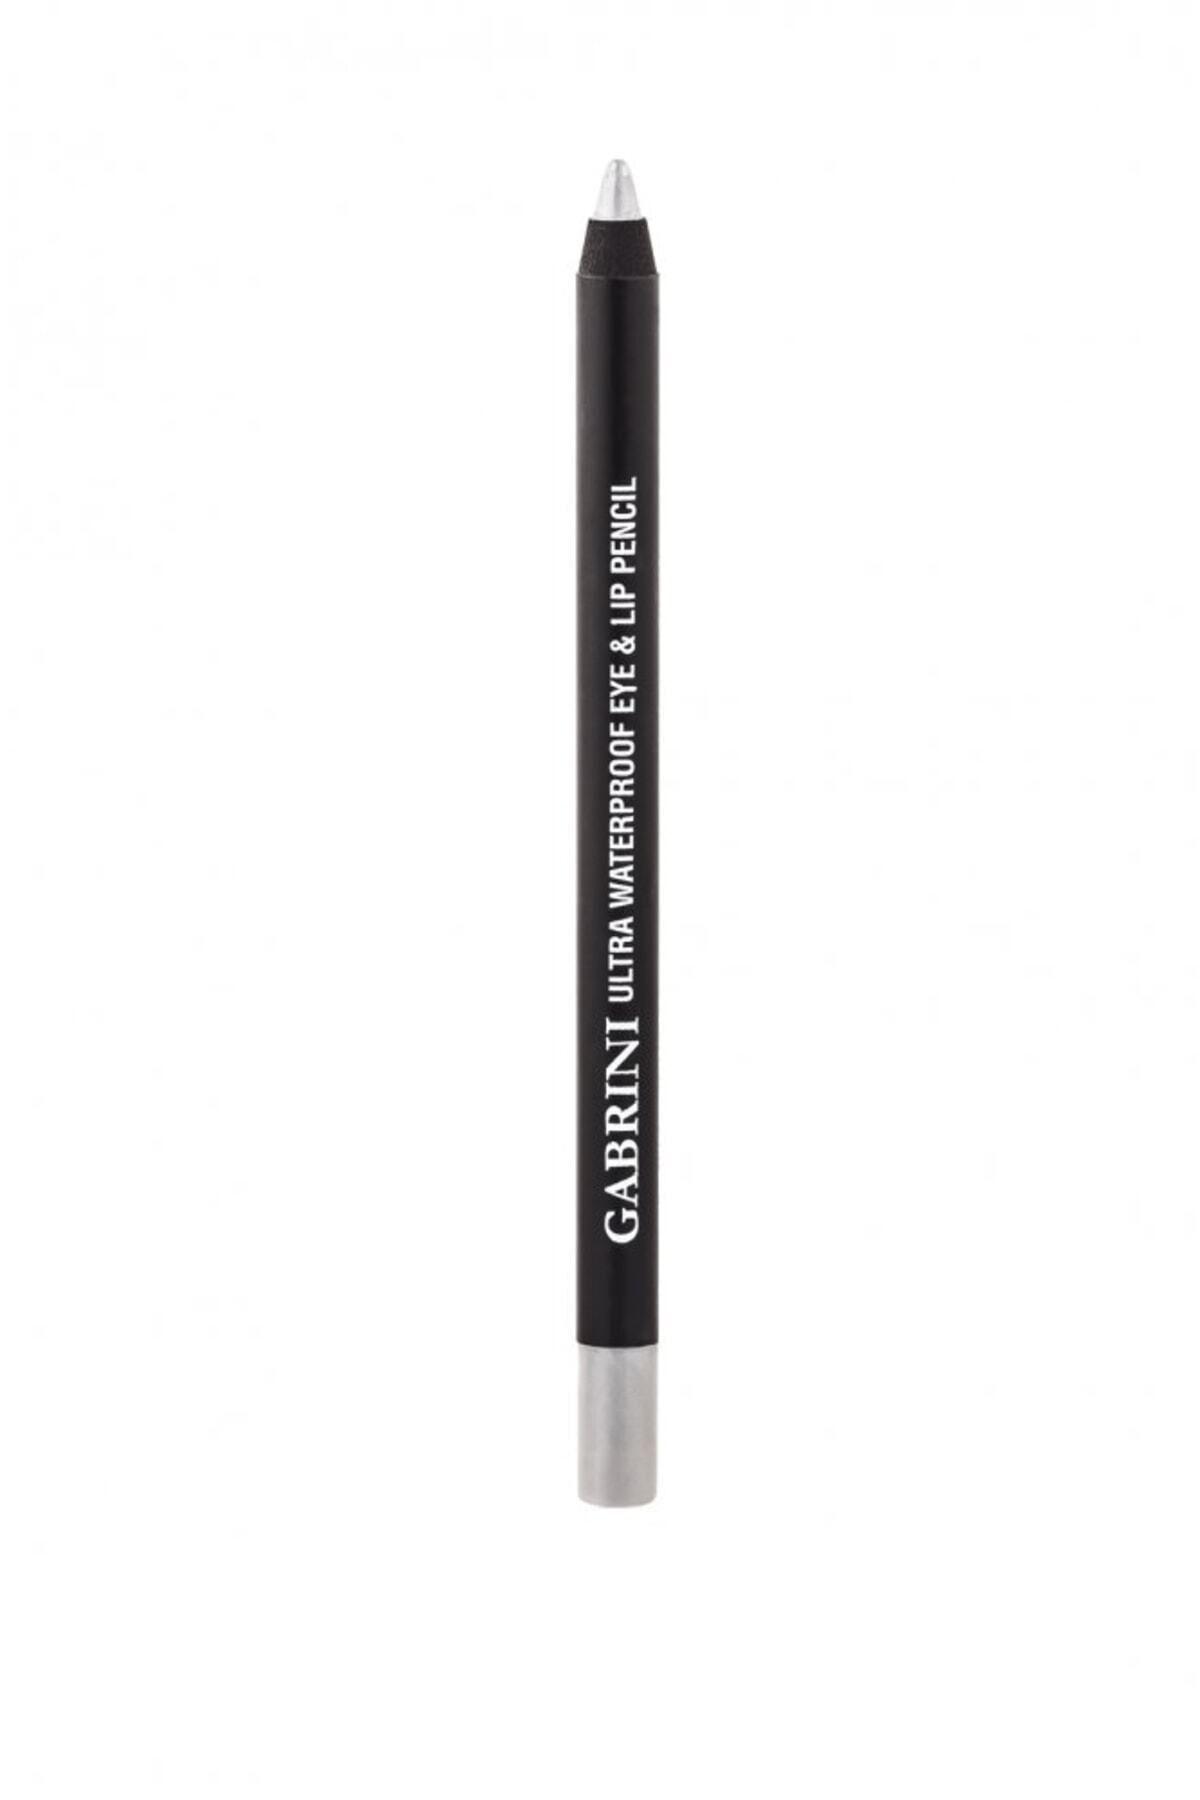 Gabrini Ultra Waterproof Eye & Lip Pencil 03